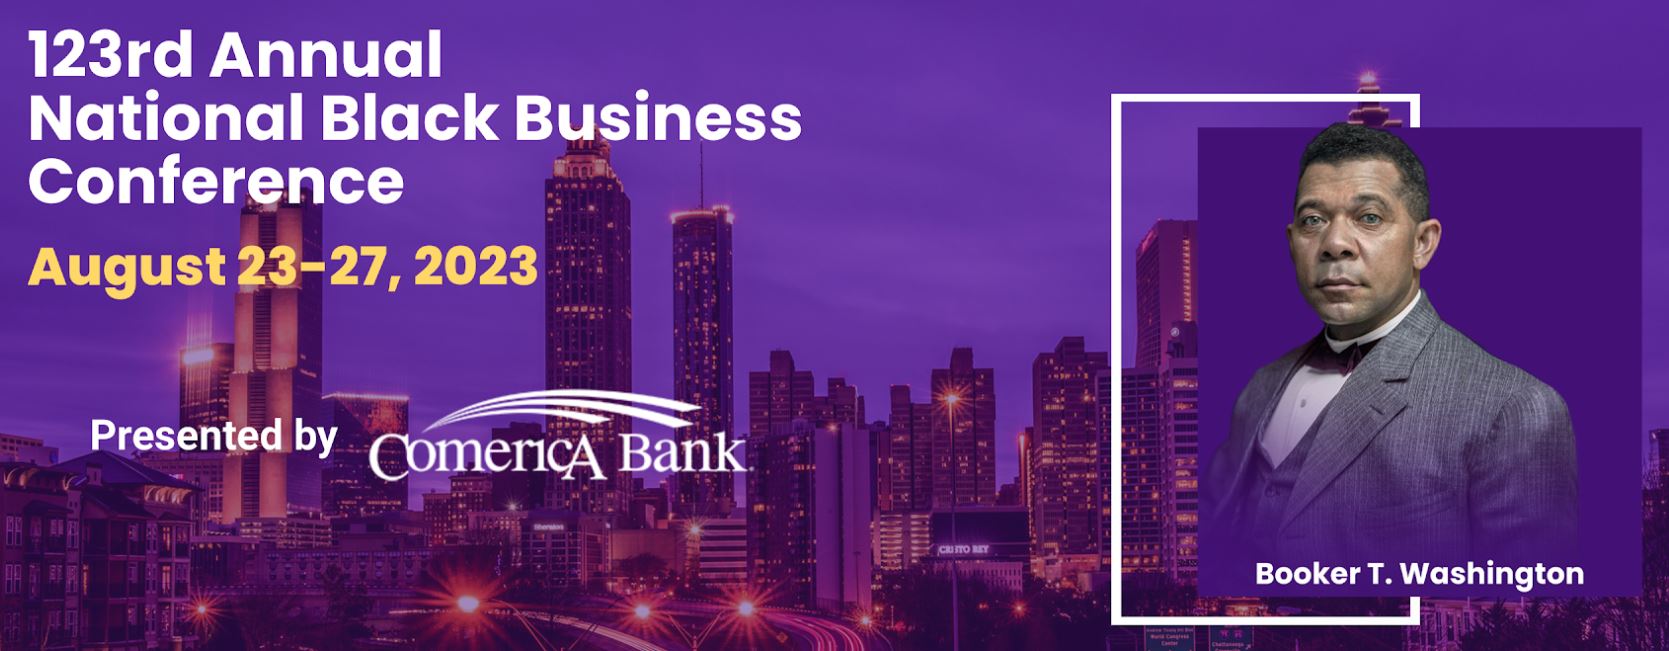 CoAmerica Bank Presents 123rd Annual National Black Business